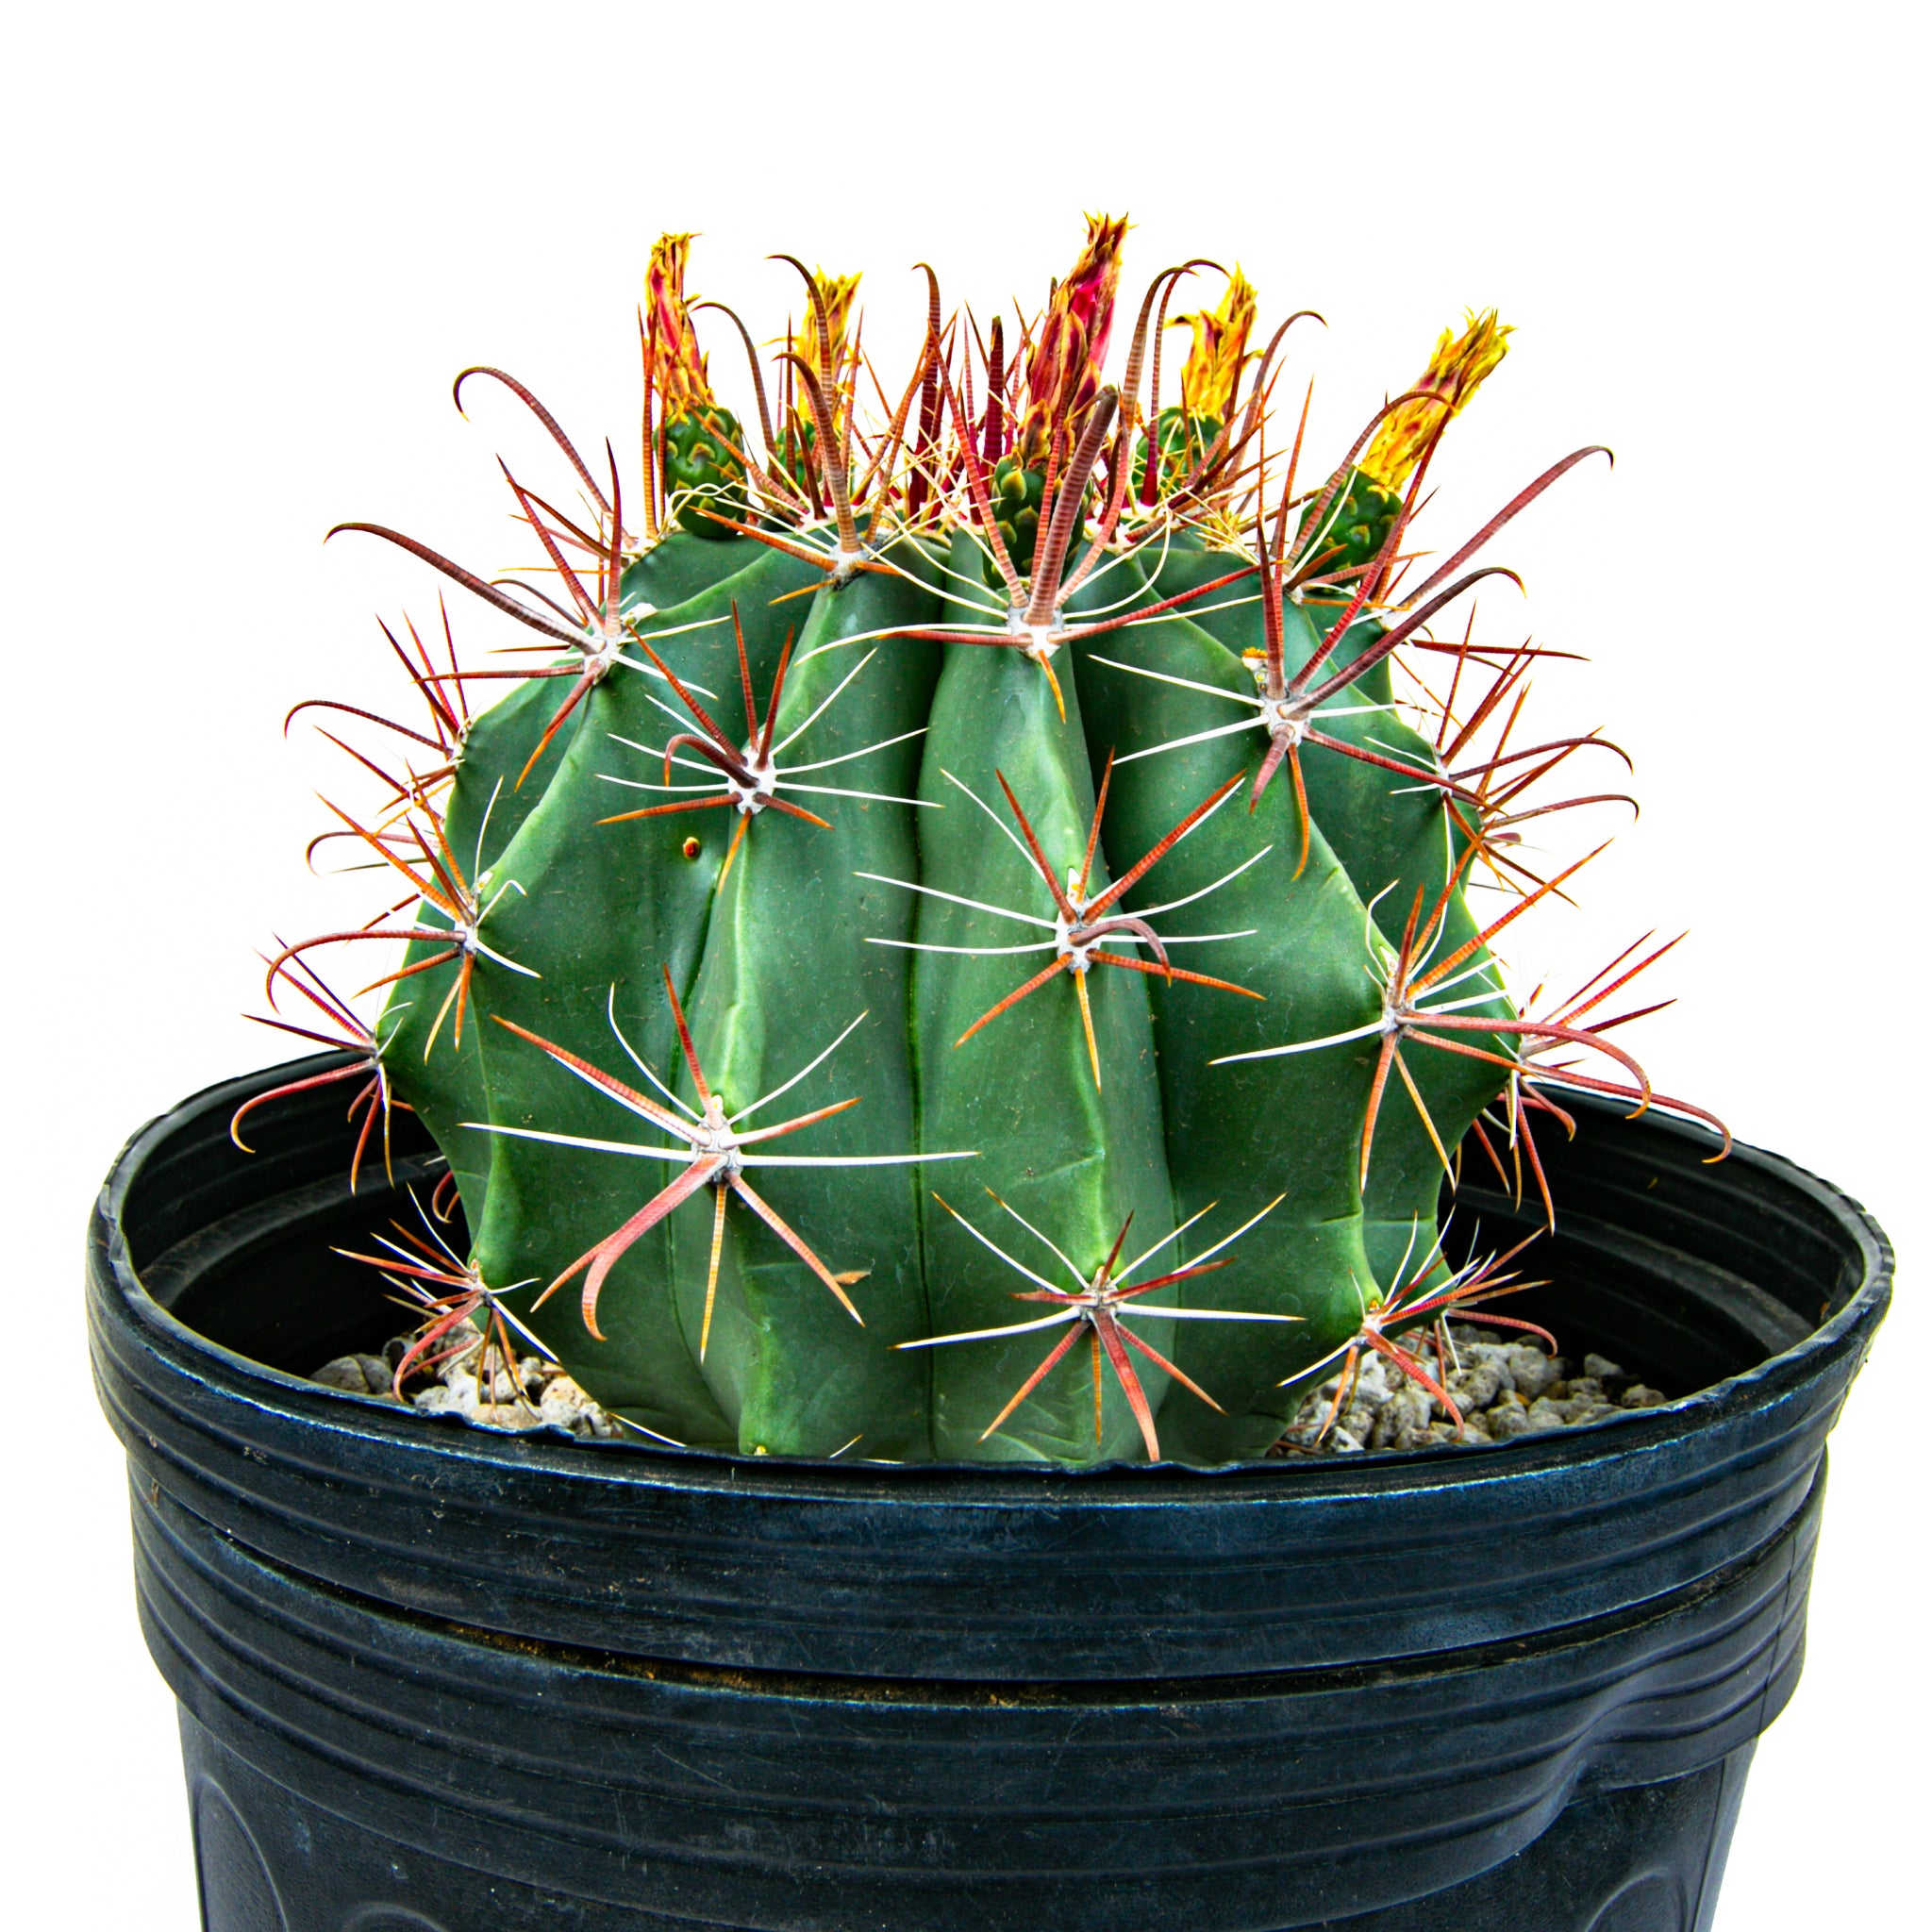 Southwestern Barrel Cactus (Ferocactus Wislizeni) - The Cactus Outlet